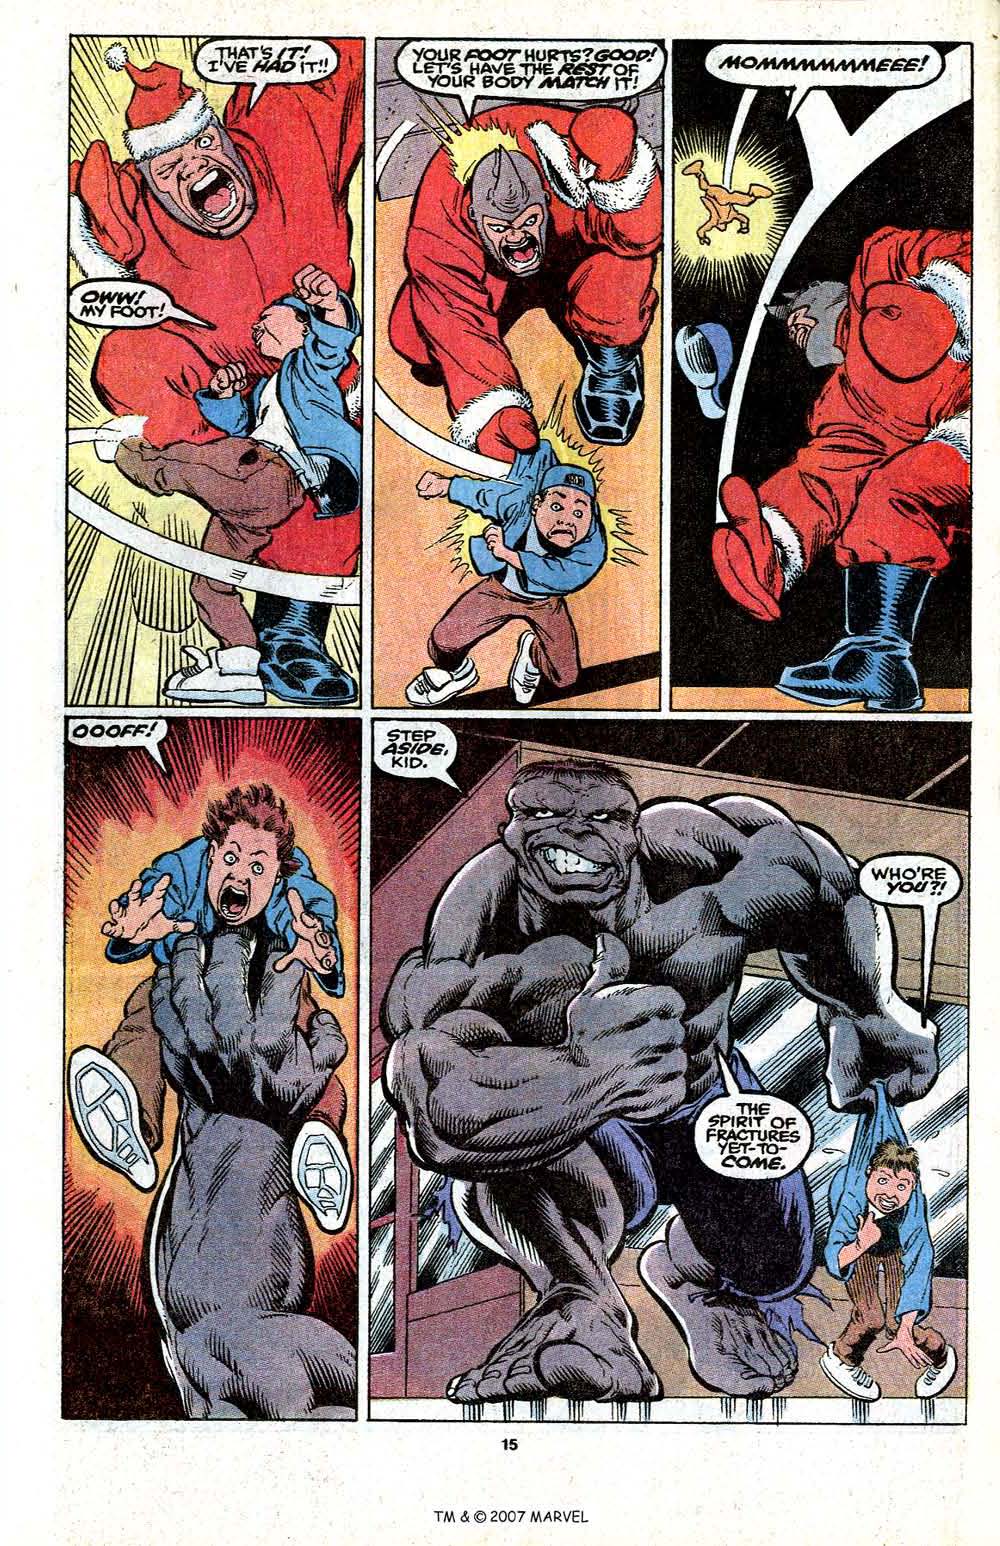 The Incredible Hulk #378 February 1991 Marvel Comics 